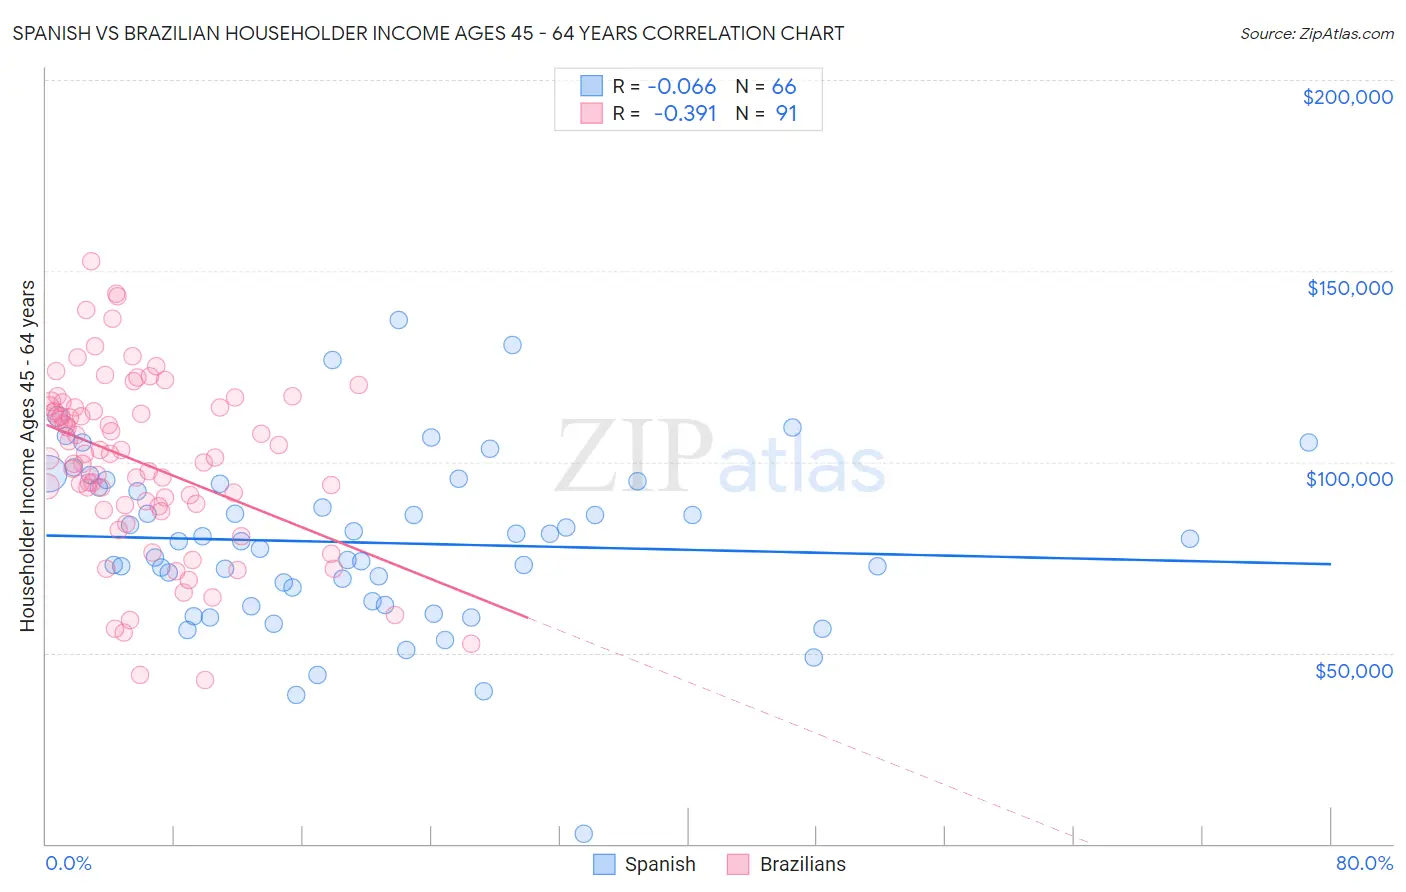 Spanish vs Brazilian Householder Income Ages 45 - 64 years